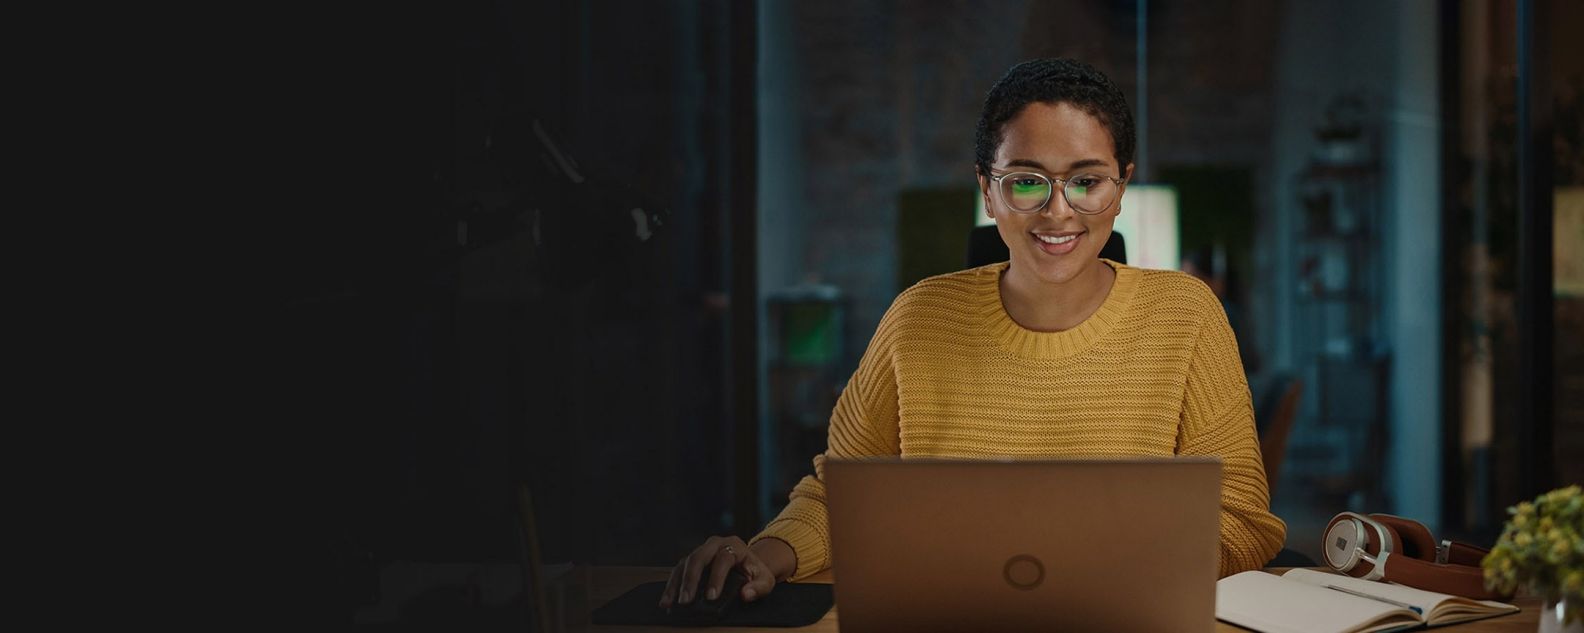 wanita menggunakan laptop dan tersenyum